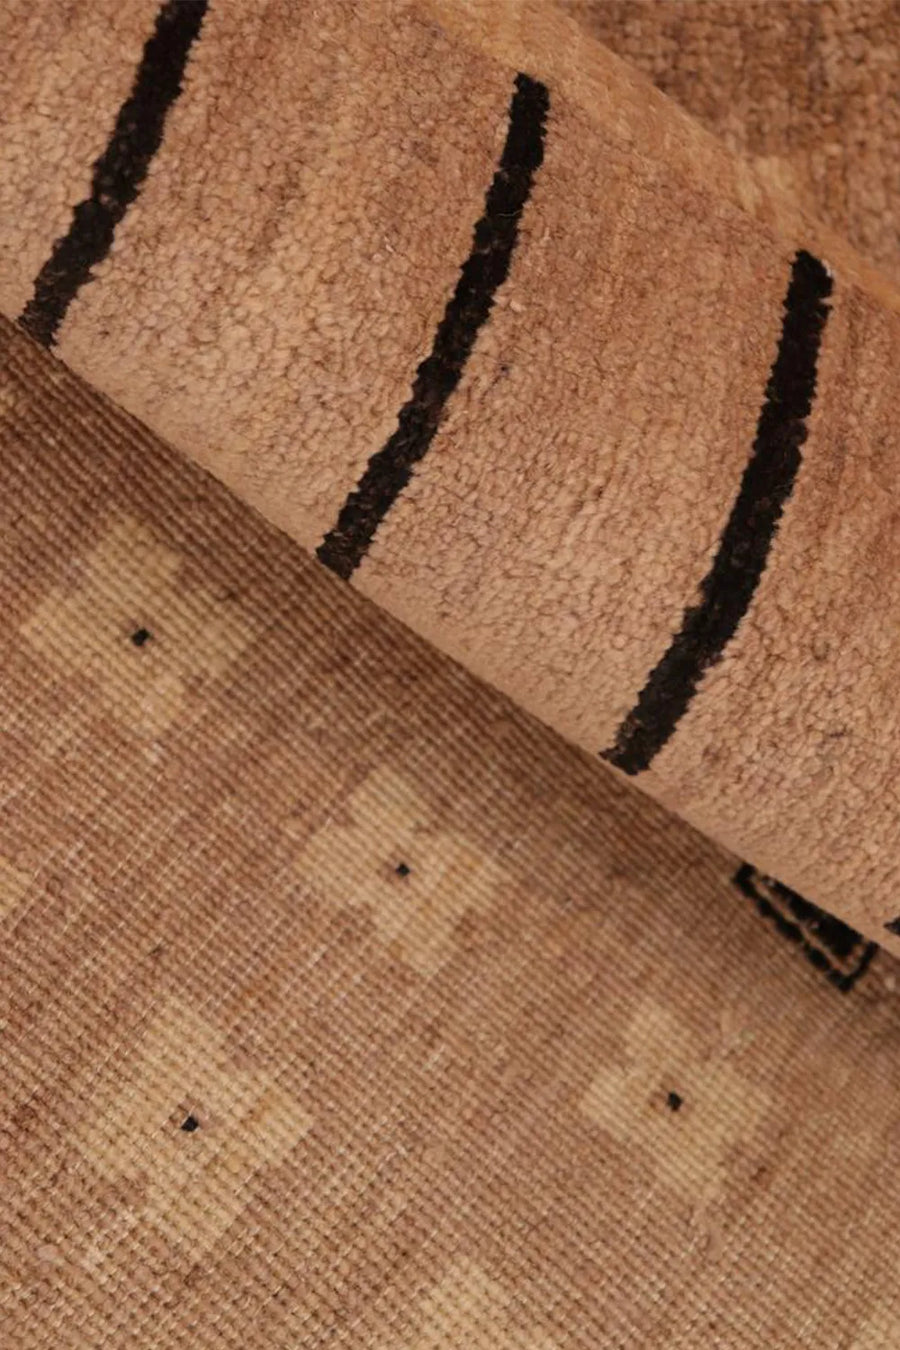 Simple yet eye-catching mid-century modern rug, ideal for tasteful decor.